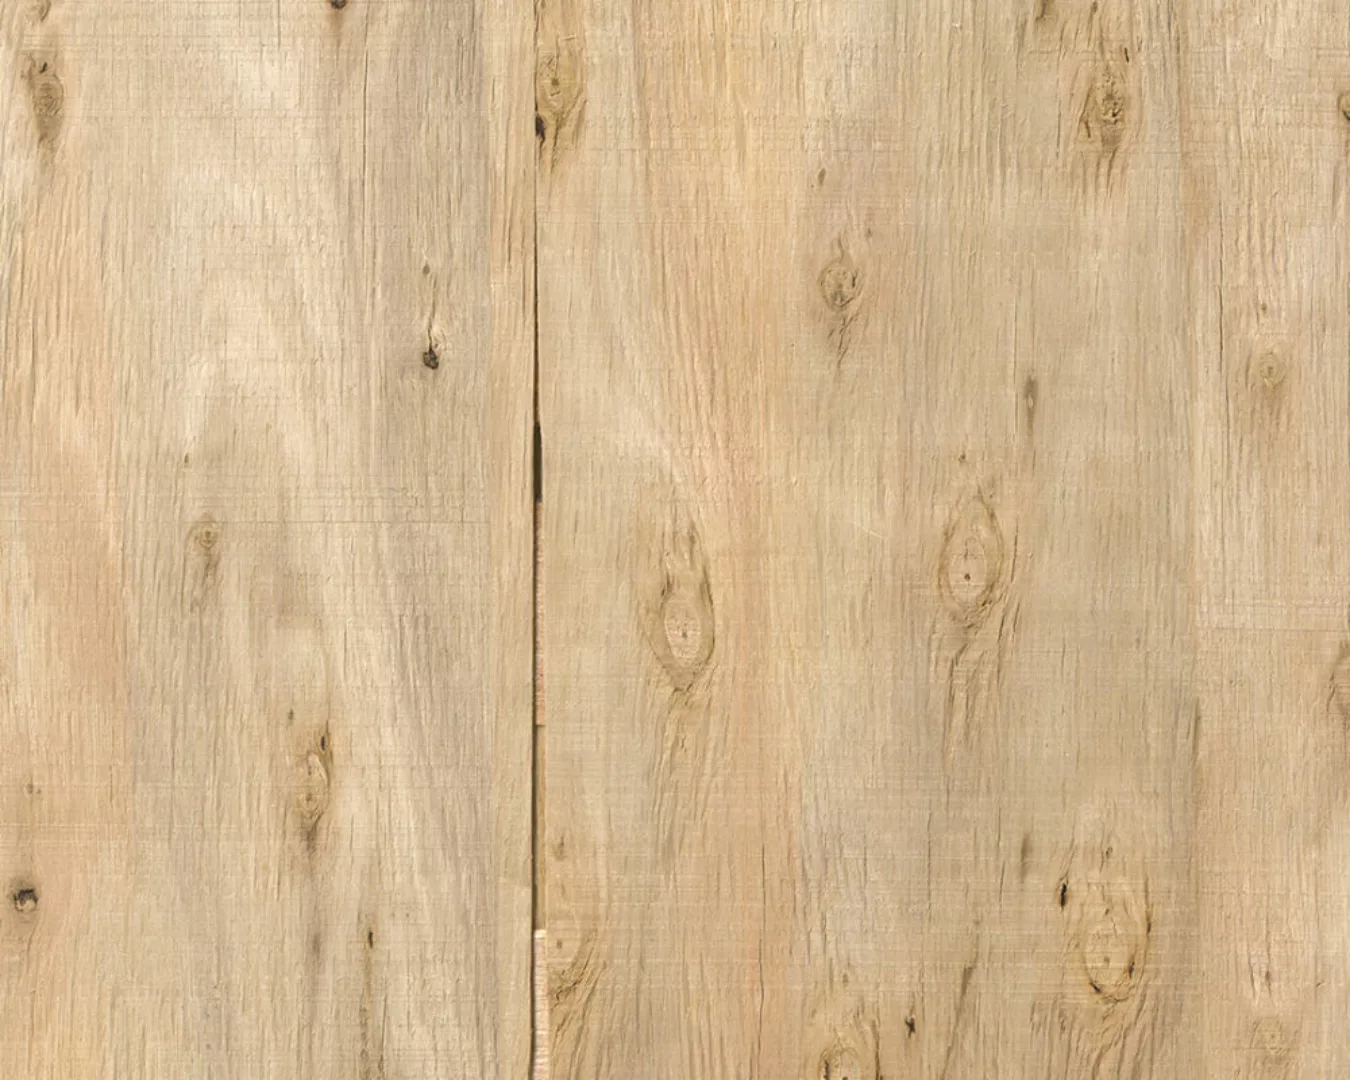 Fototapete "helles Holz" 4,00x2,50 m / Glattvlies Brillant günstig online kaufen